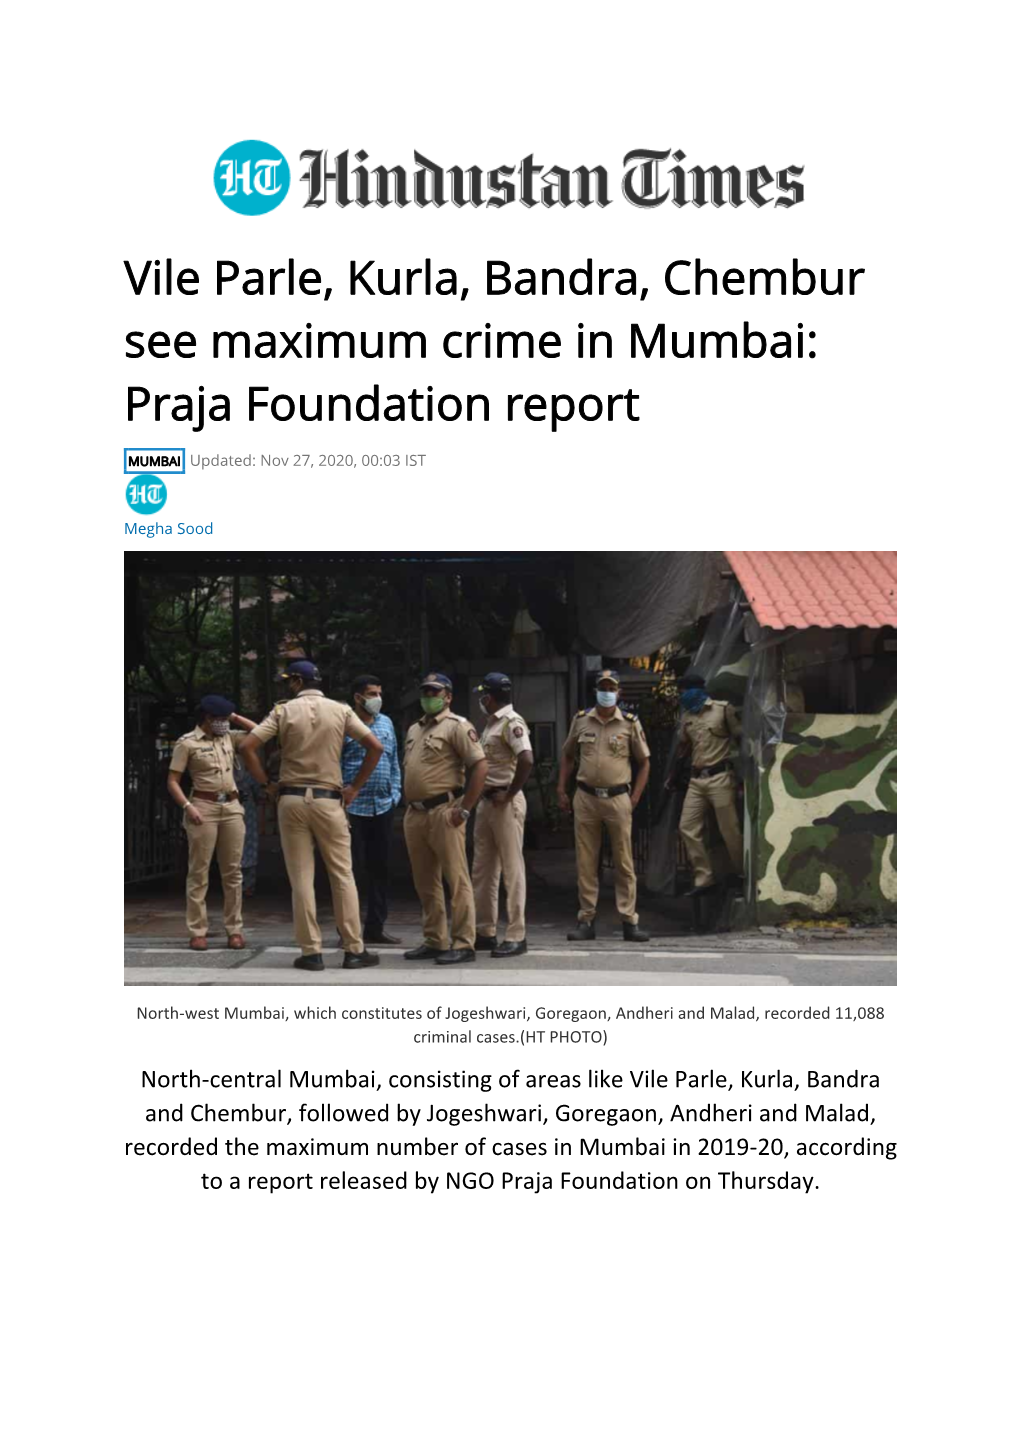 Vile Parle, Kurla, Bandra, Chembur See Maximum Crime in Mumbai: Praja Foundation Report